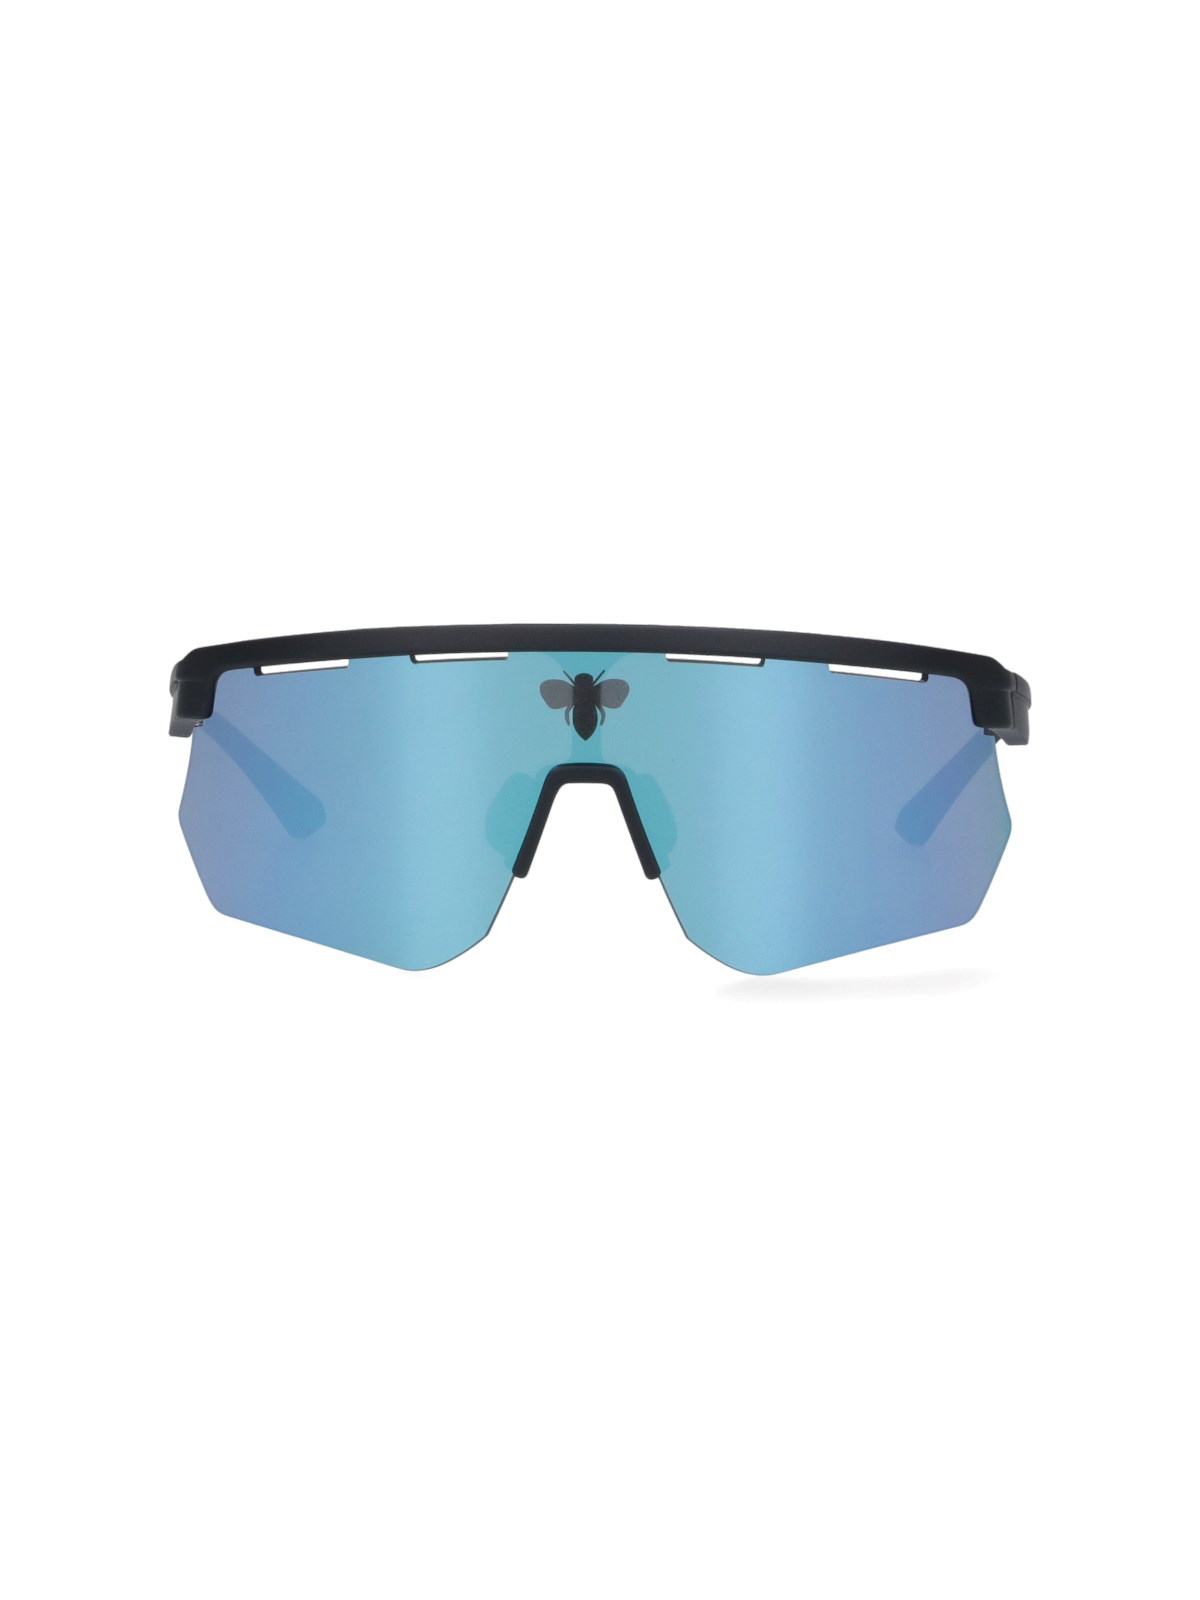 Facehide 'raider Bluesilver' Sunglasses